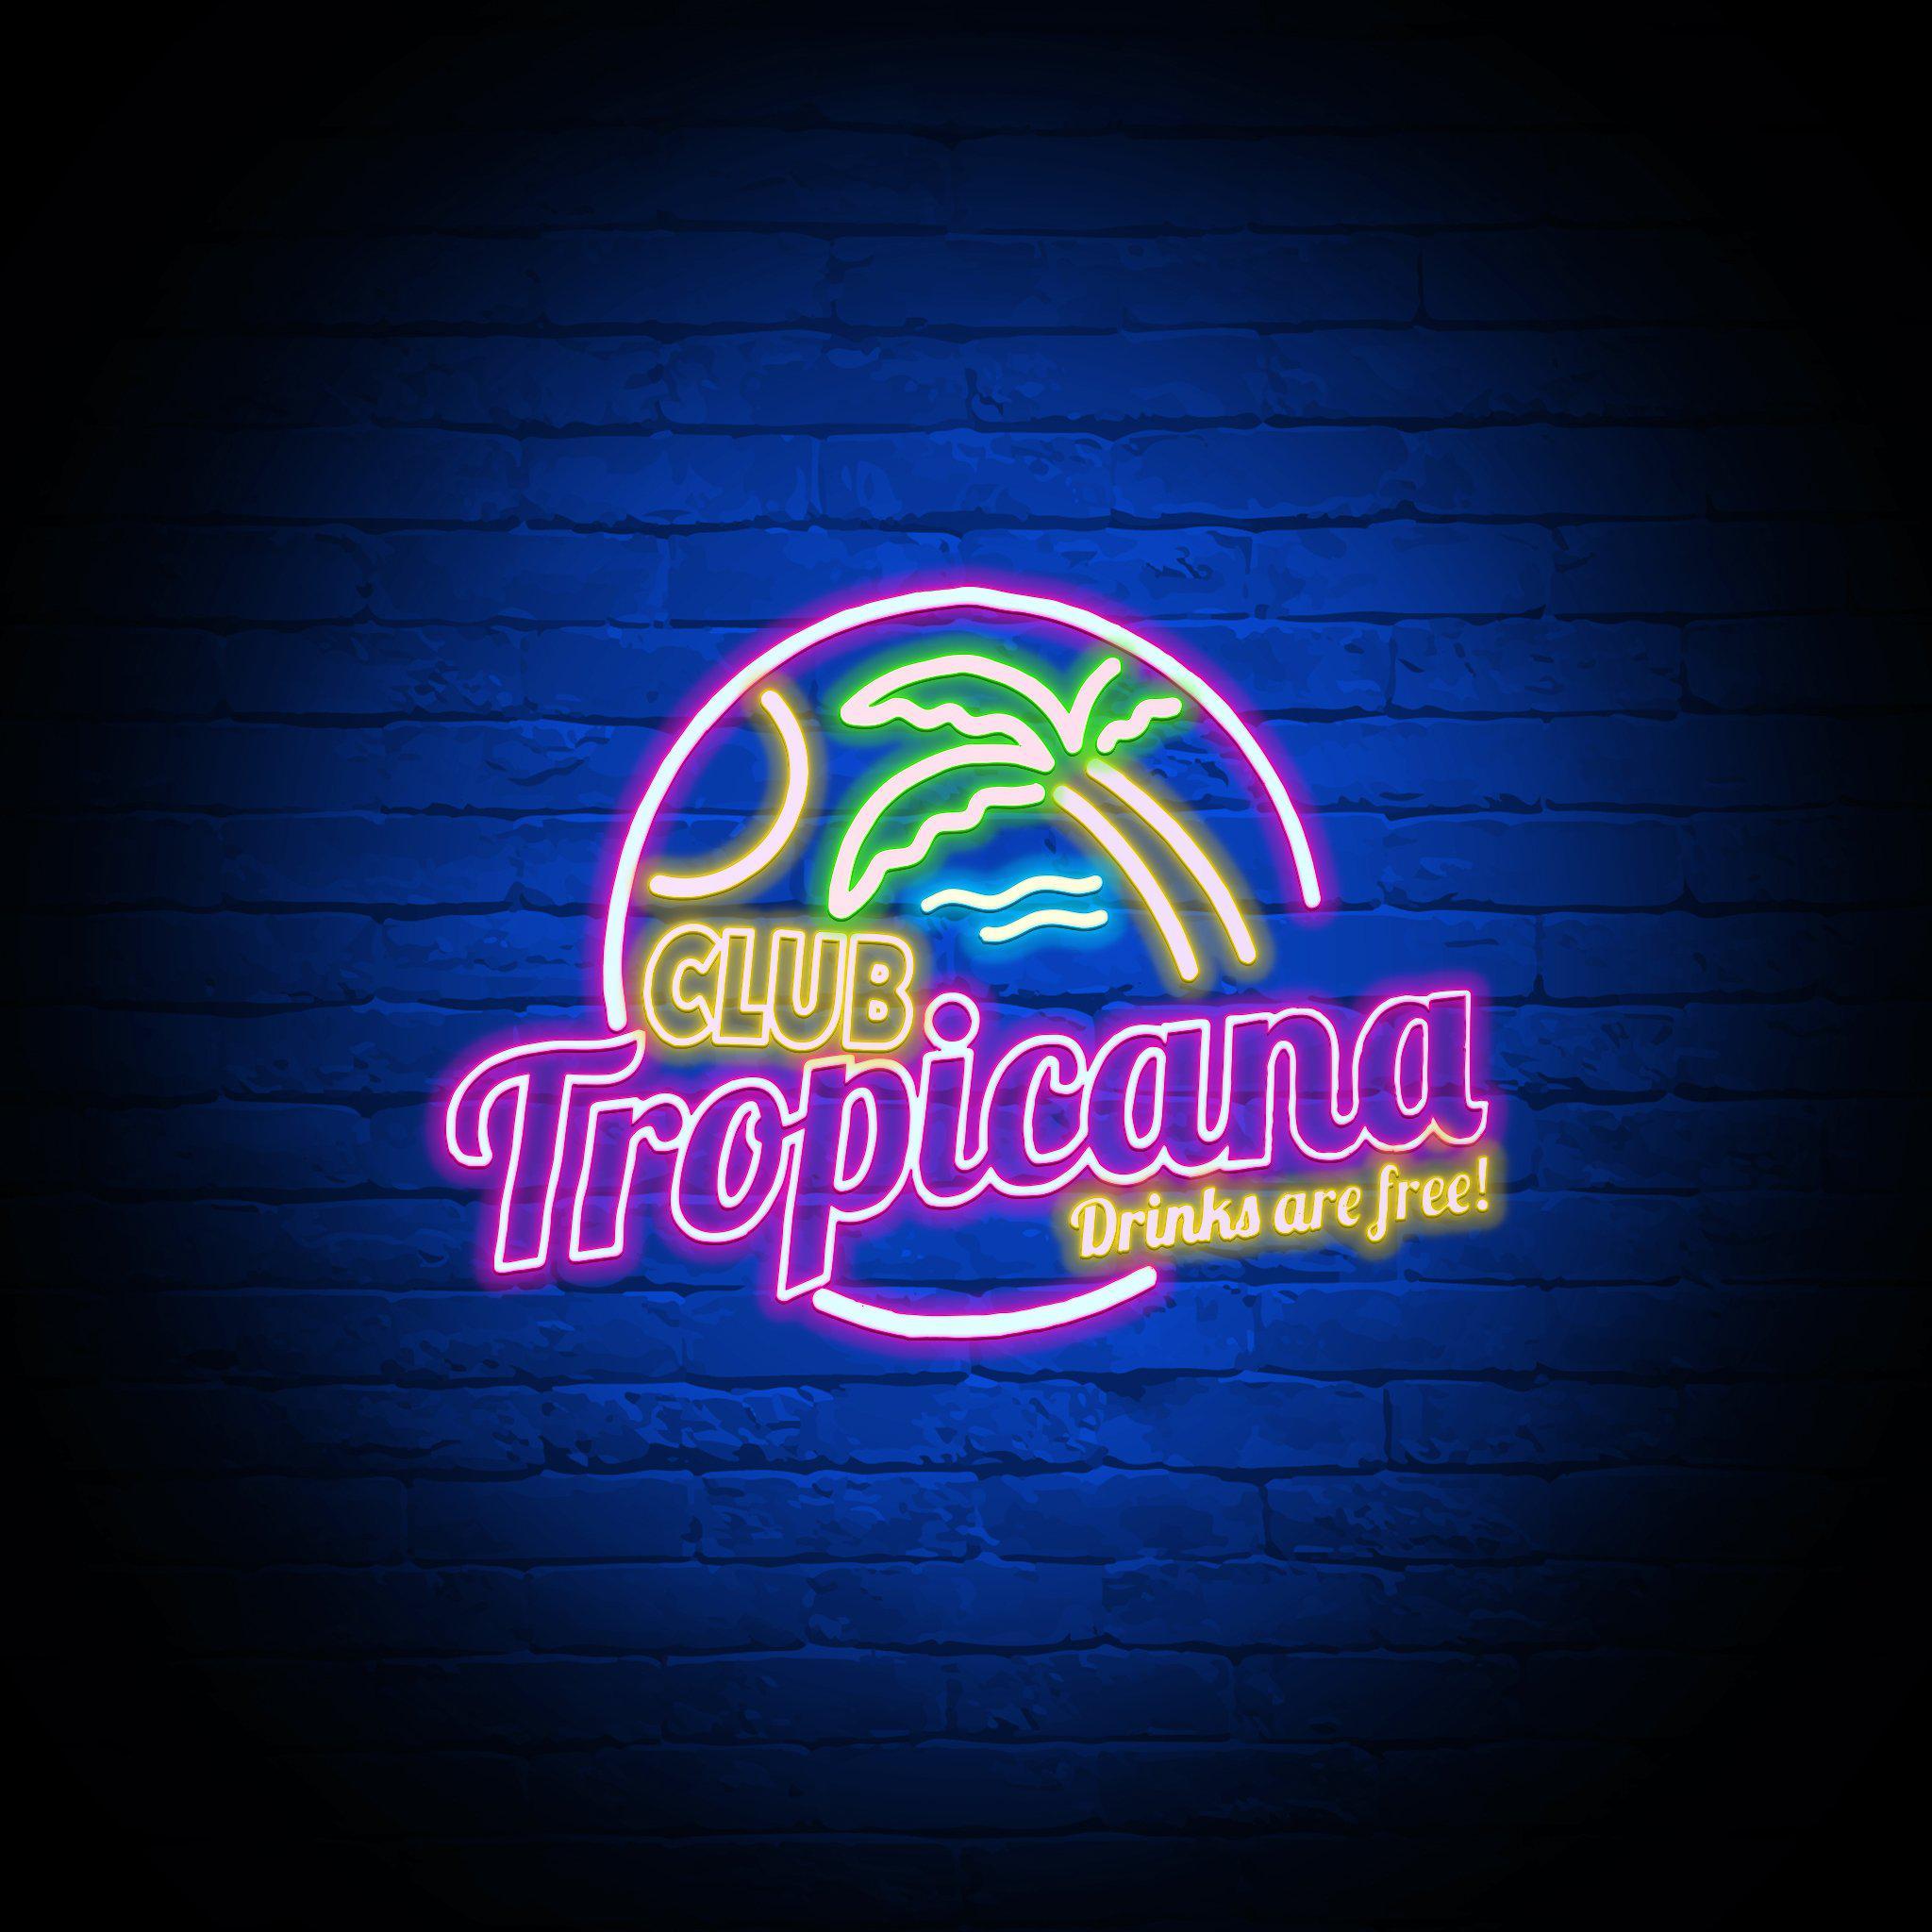 'CLUB TROPICANA' NEON SIGN